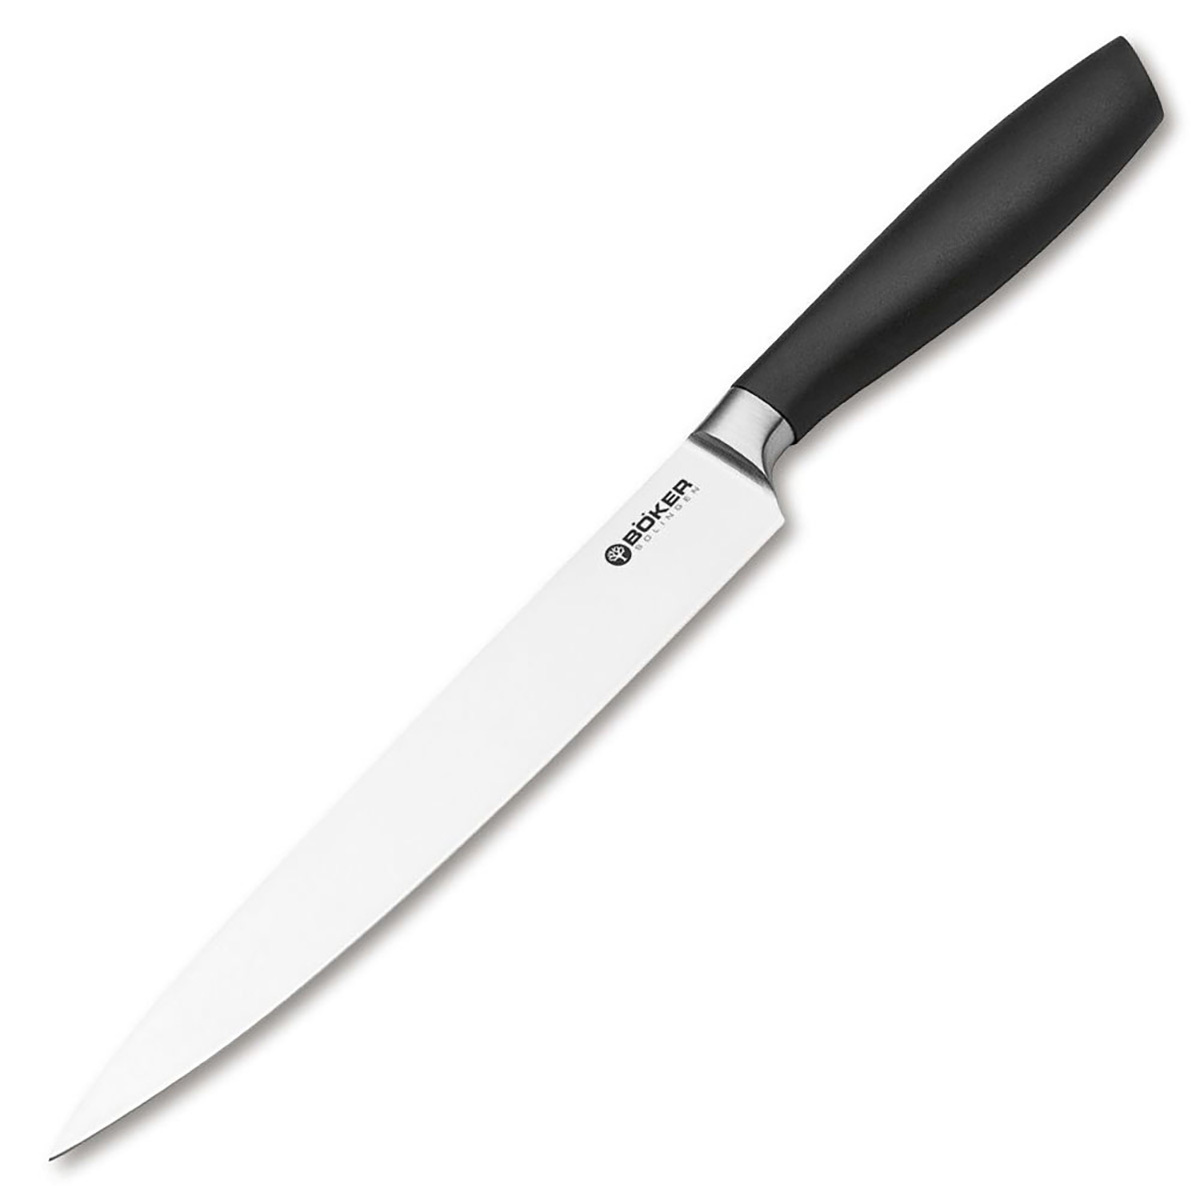 Кухонный нож для нарезки Boker Core Professional Carving Knife 20.7 см, сталь 1.4116, рукоять пластик